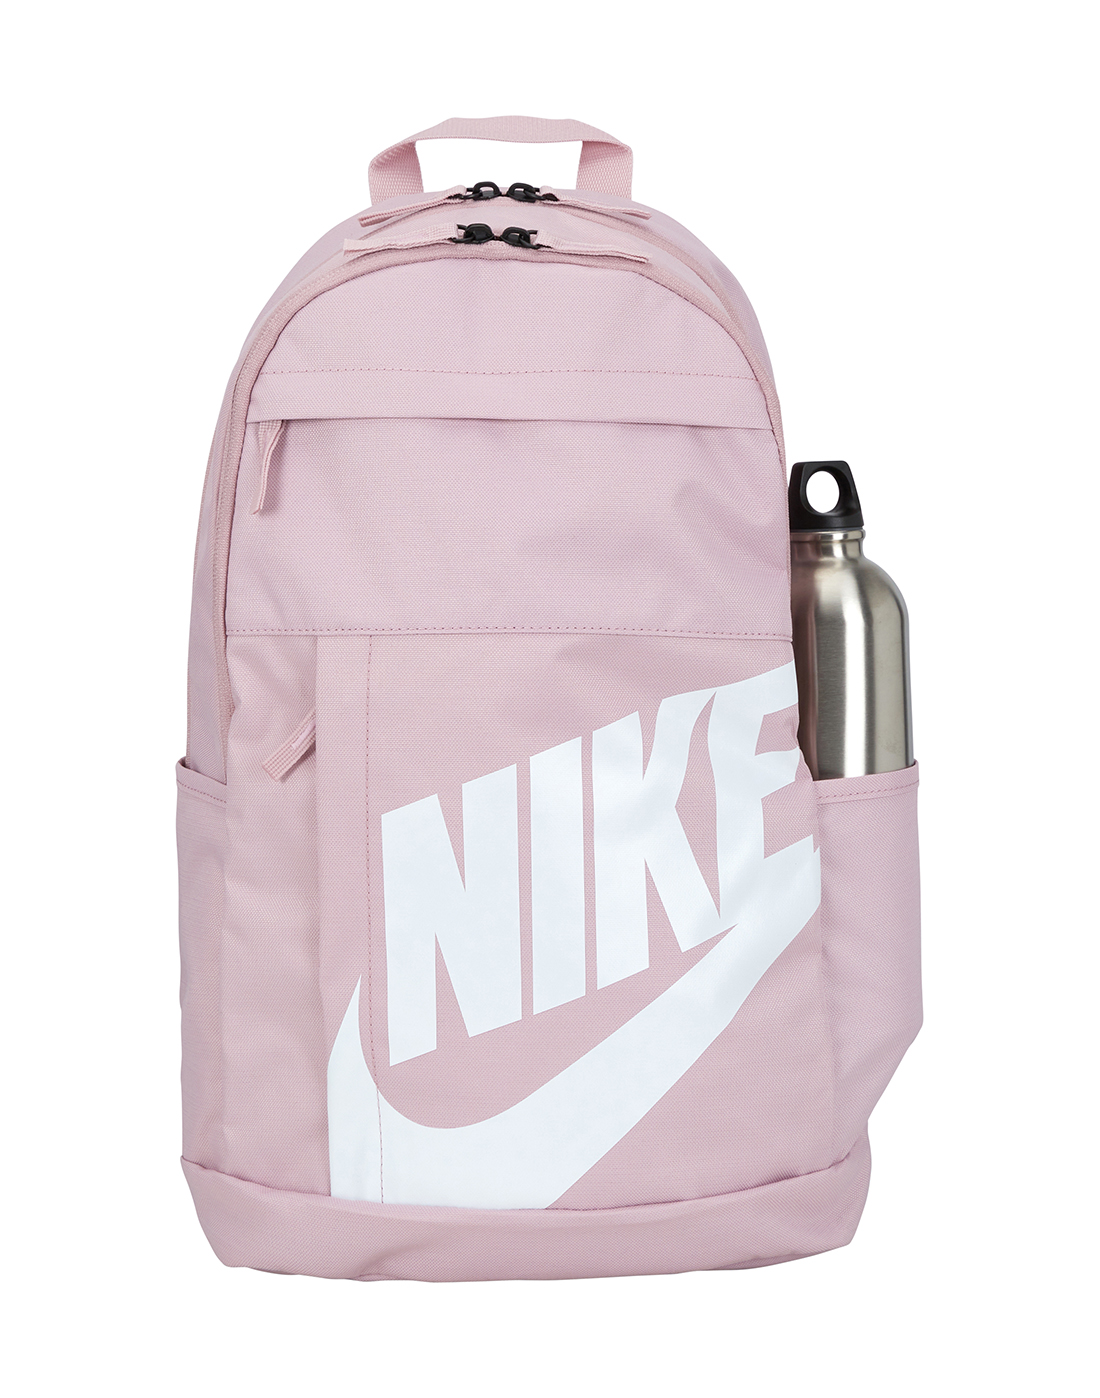 pink nike elemental backpack